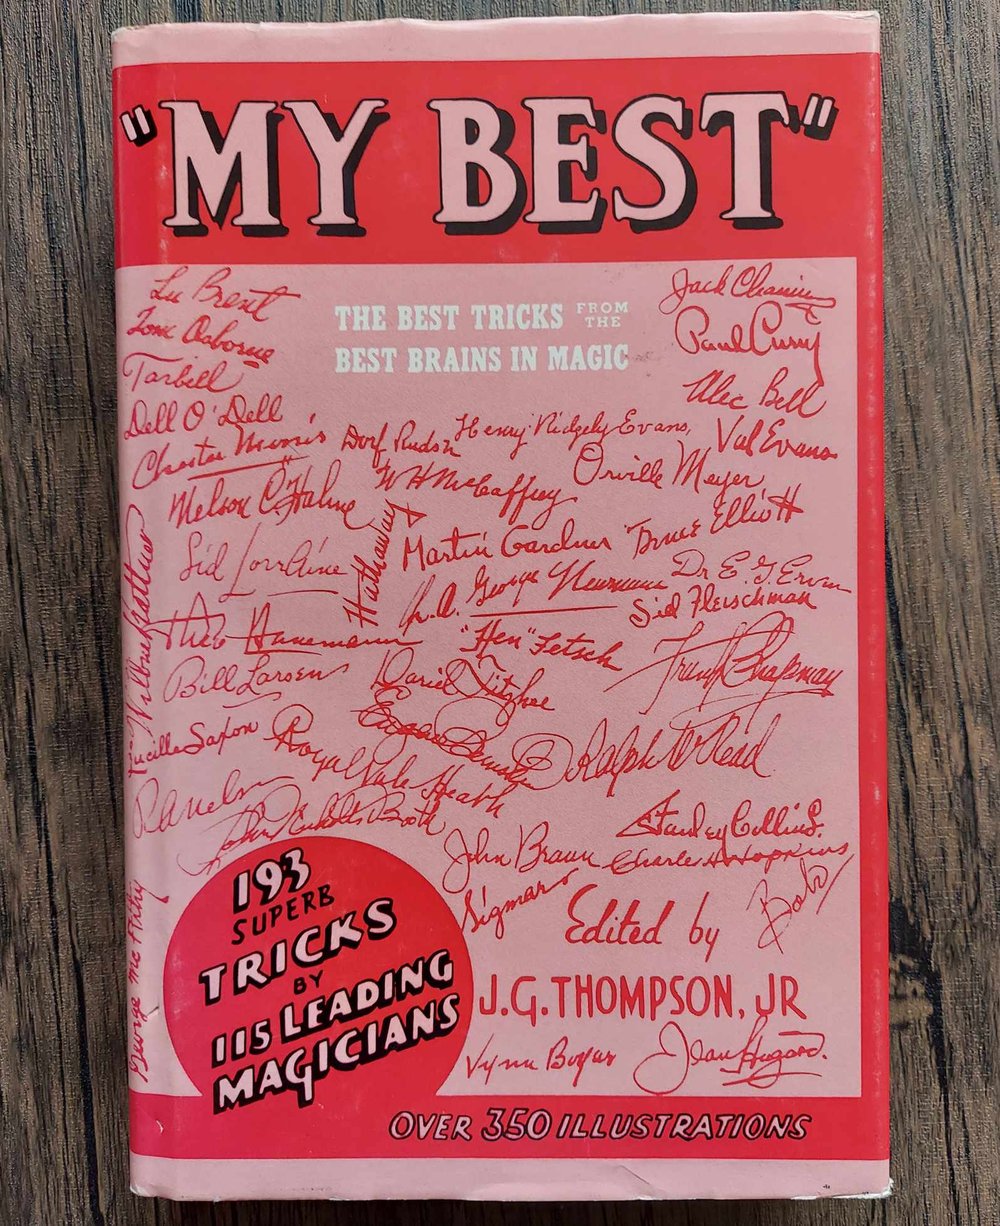 My Best, by J. G. Thompson, Jr.